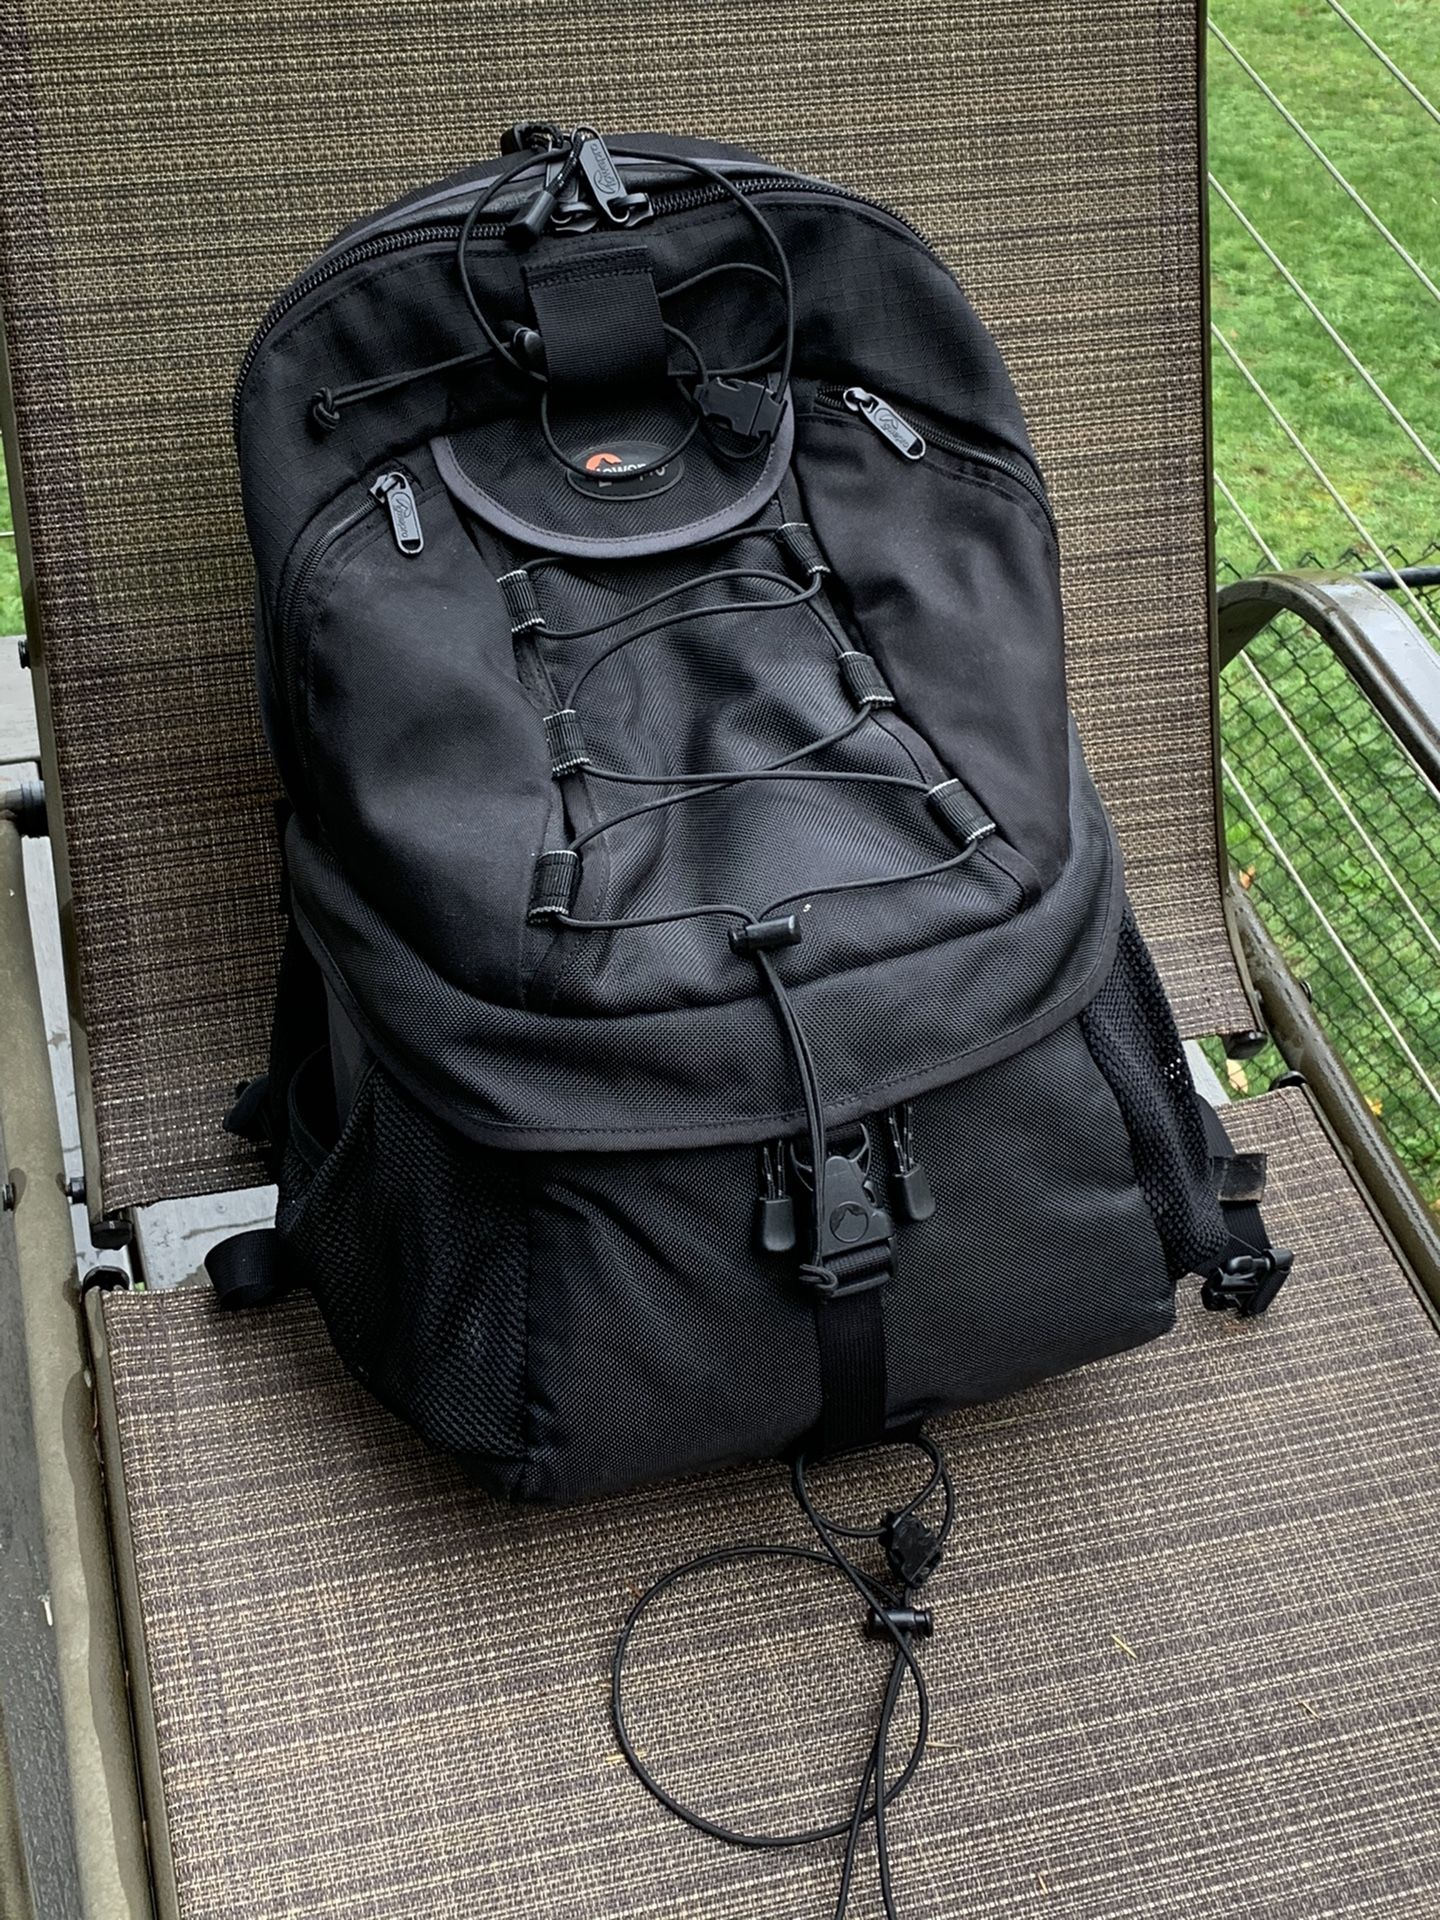 Lowepro camera backpack photo bag